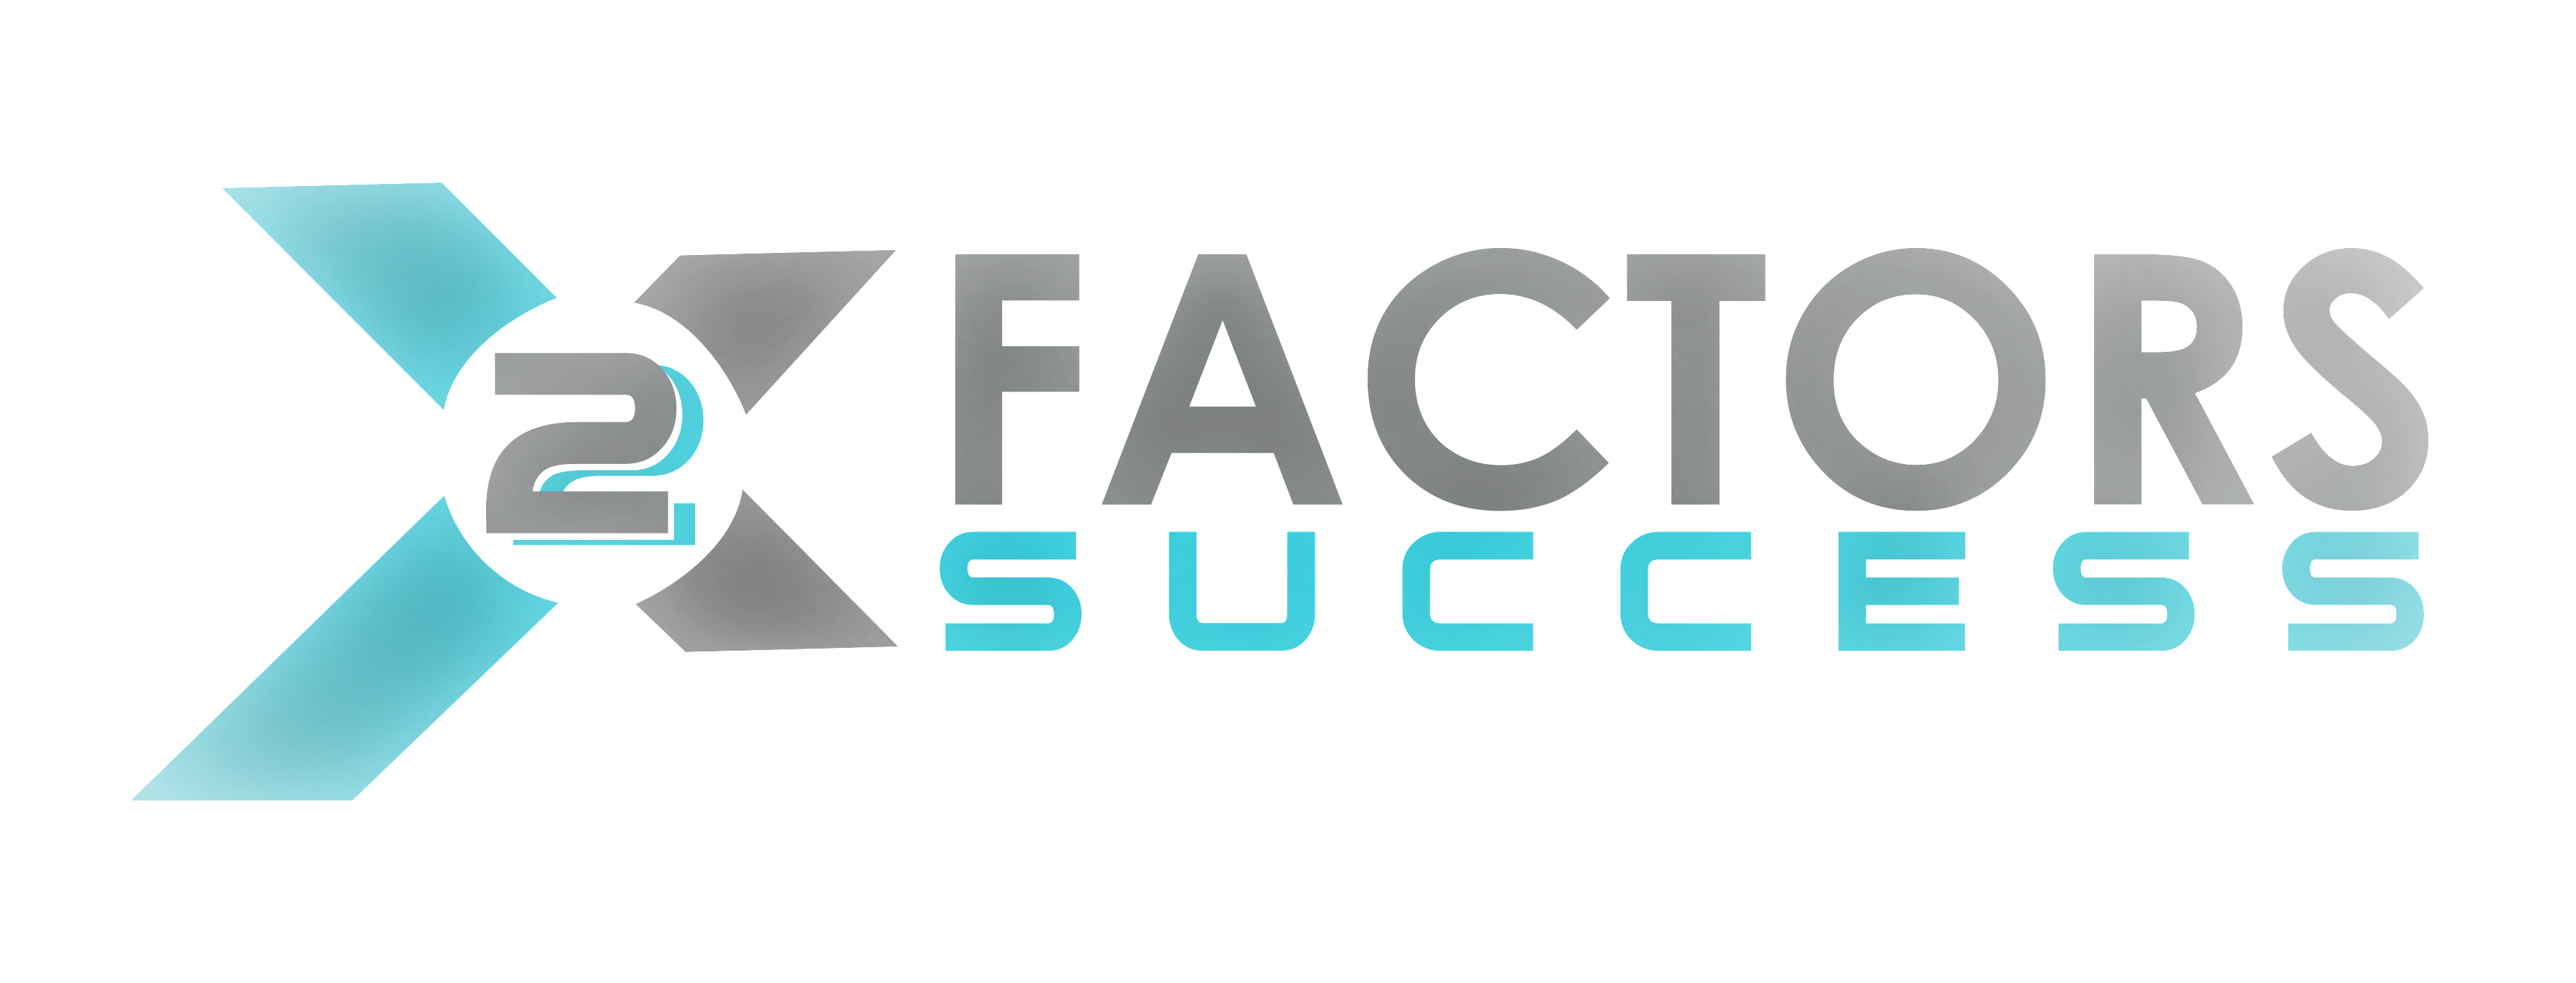 Edited Xfactors2succes-Transparant (2)